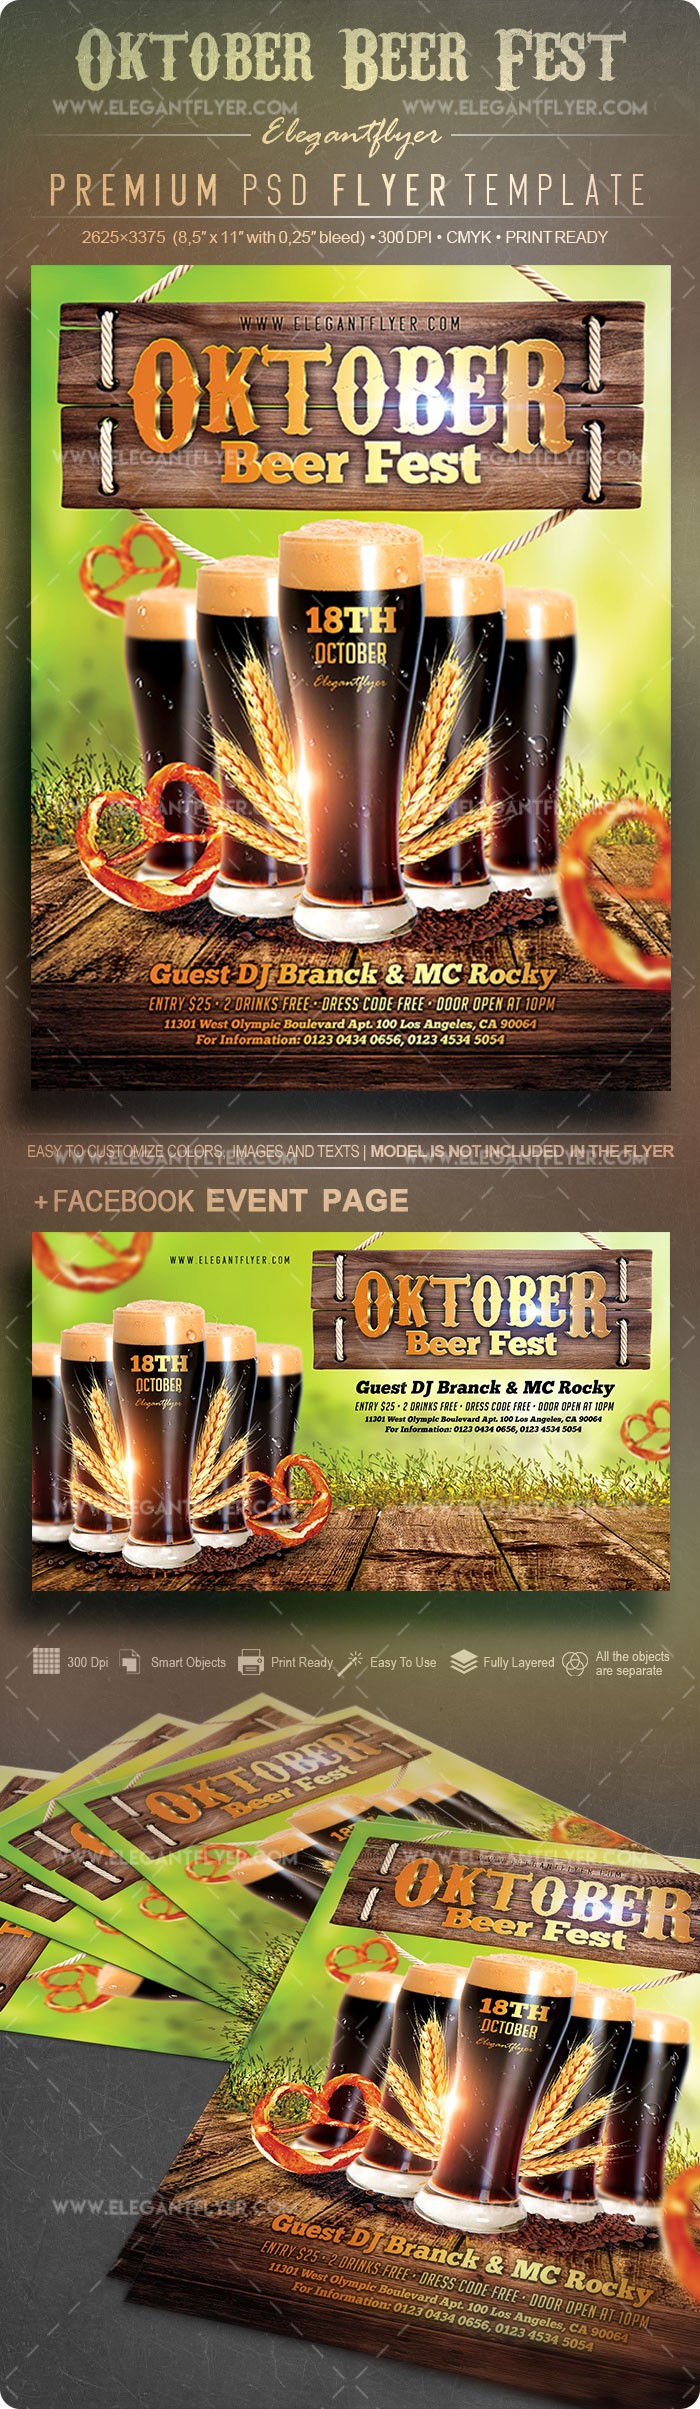 Oktober Beer Fest --> Fest della Birra di Ottobre by ElegantFlyer